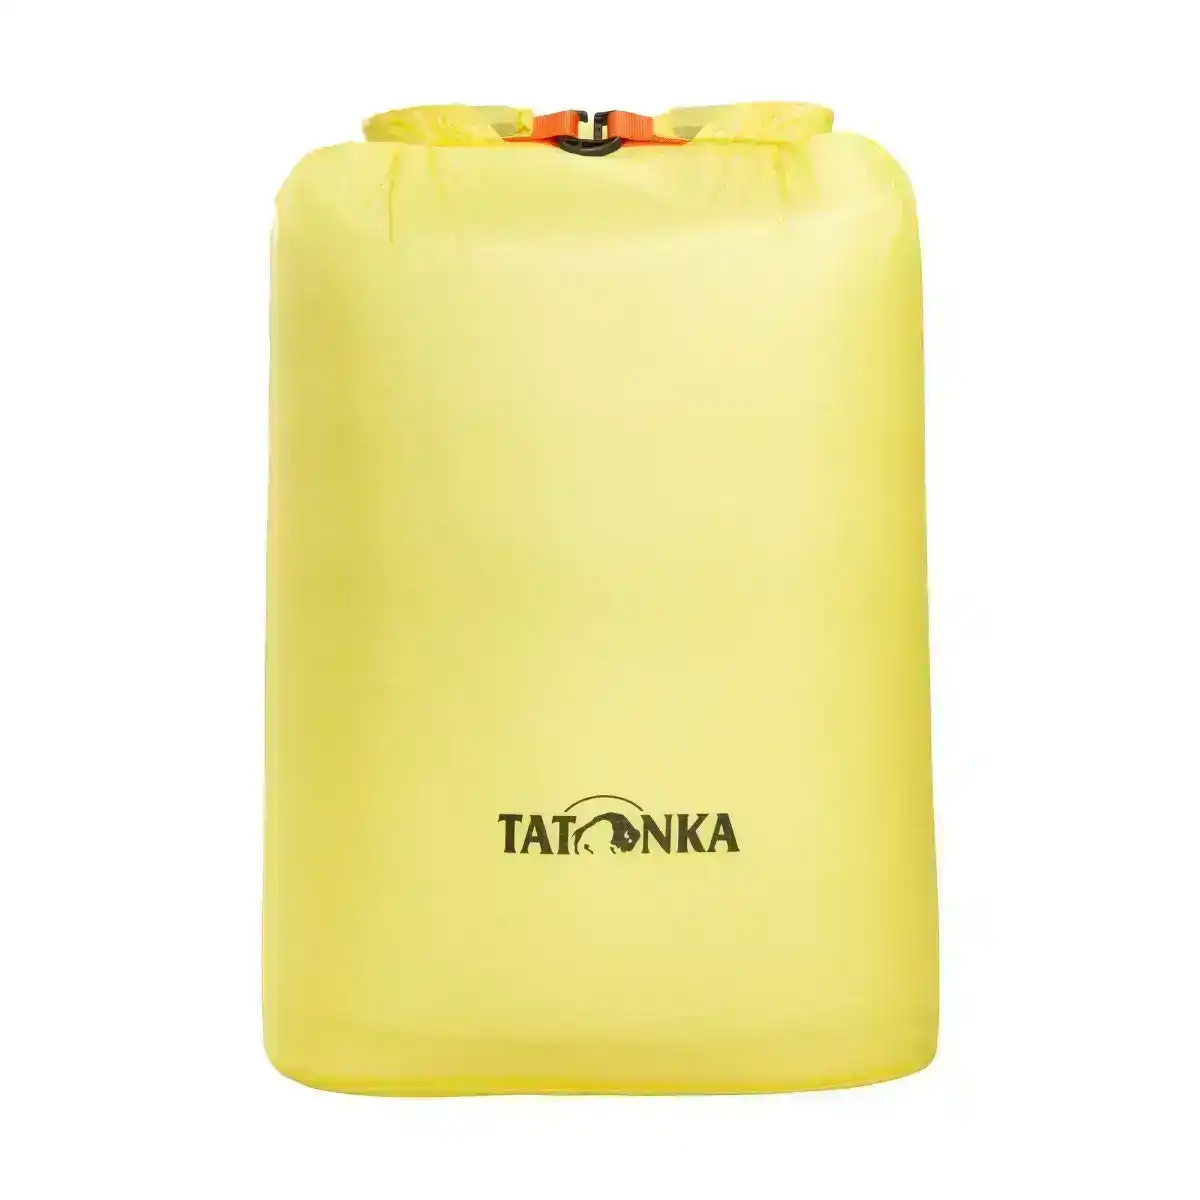 Tatonka SQZY 10L Dry Bag Packing Sac Storage/Organisation Waterproof Light YEL